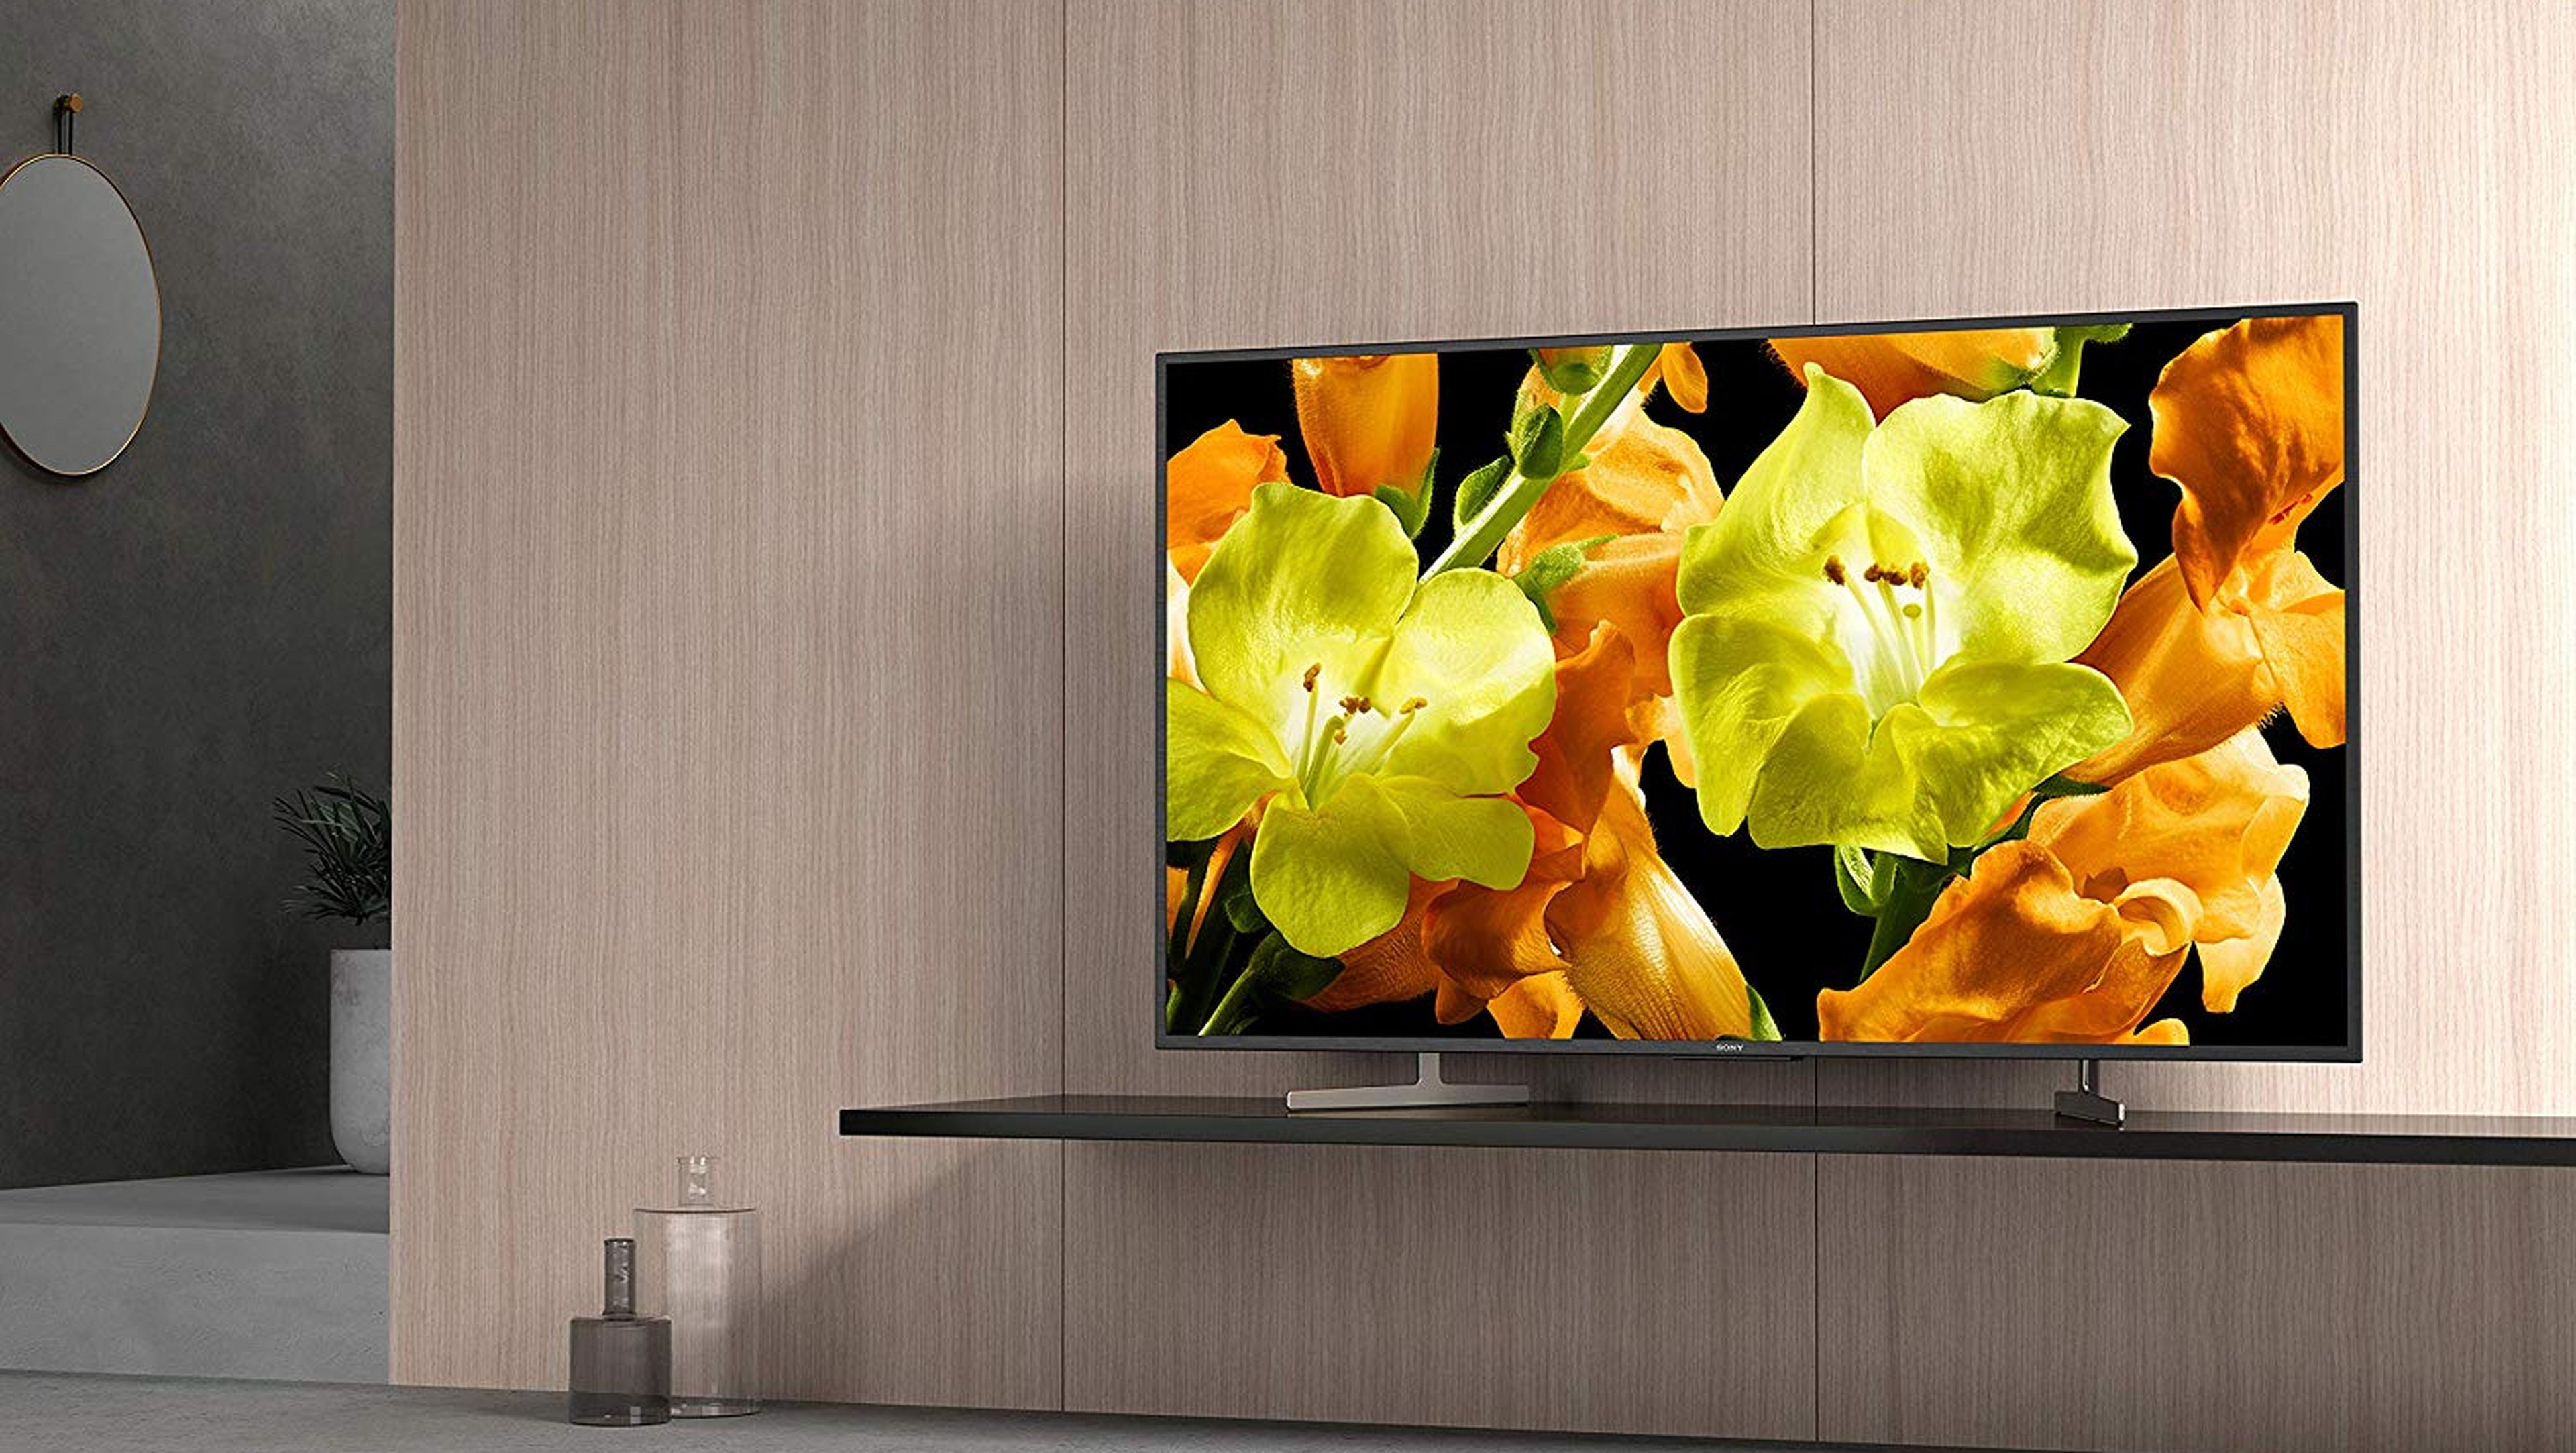 Esta smart TV de Samsung de 55 pulgadas OLED es perfecta para ver